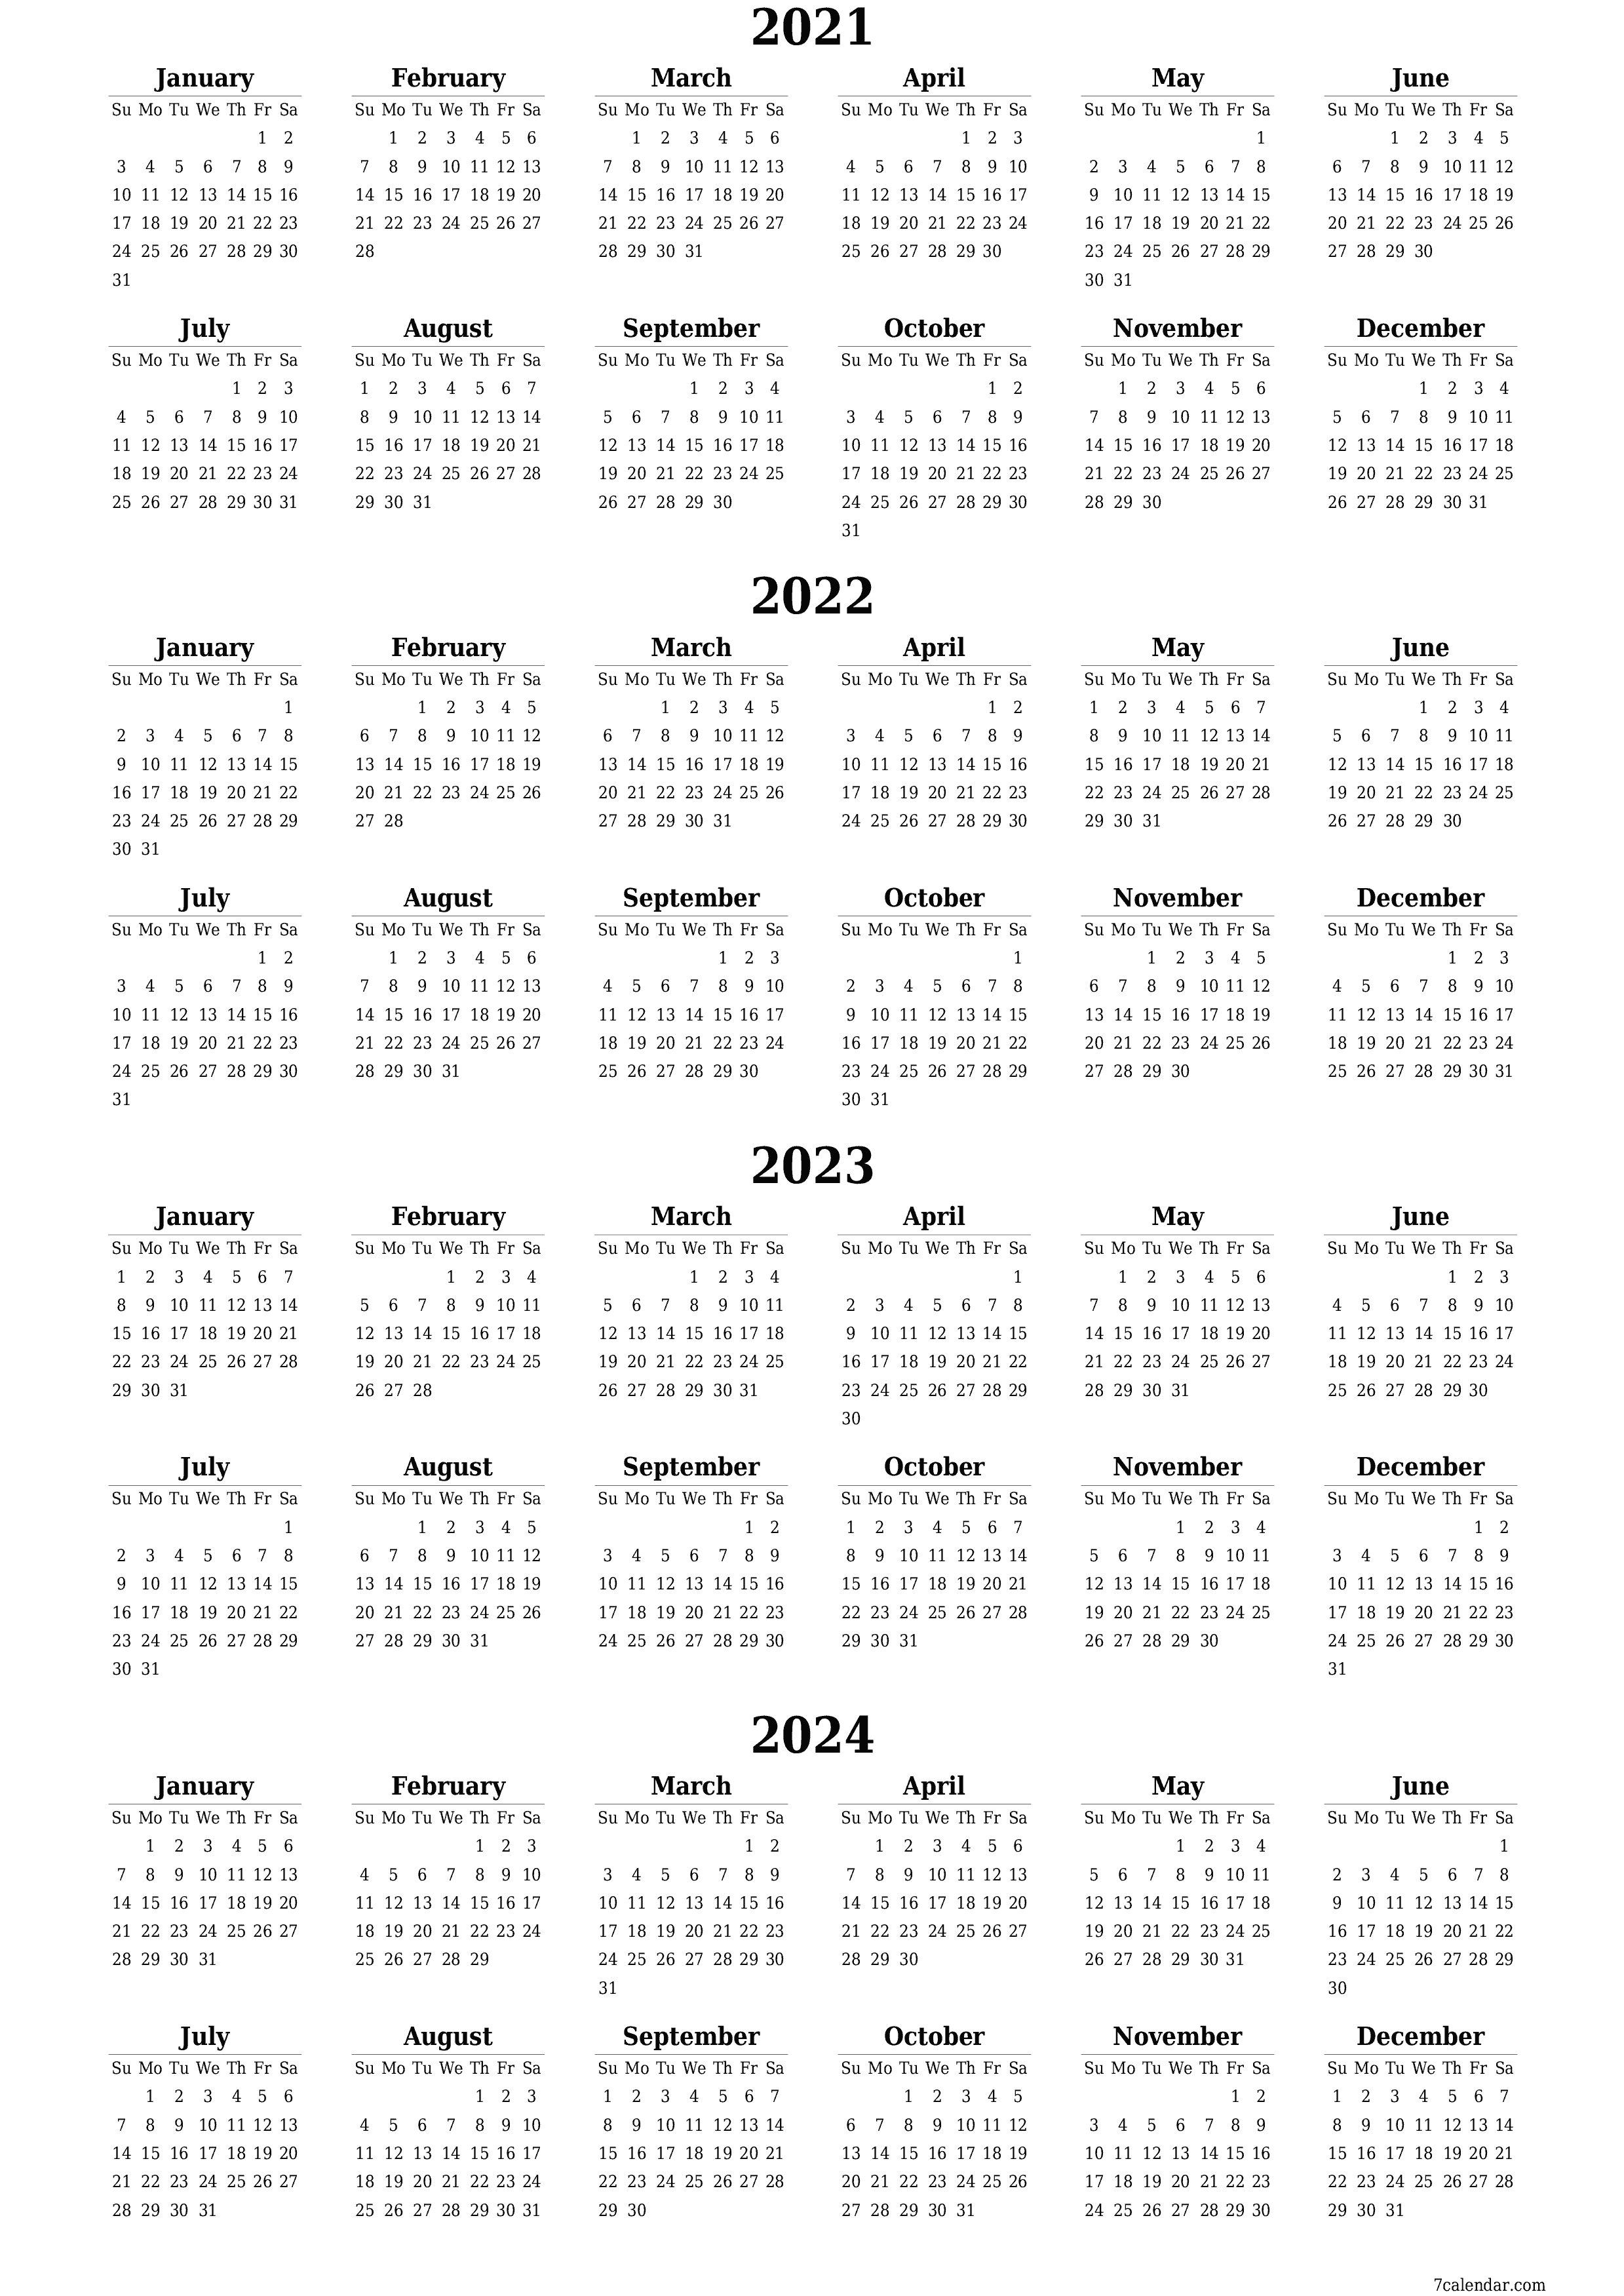 printable wall template free vertical Yearly calendar June (Jun) 2021